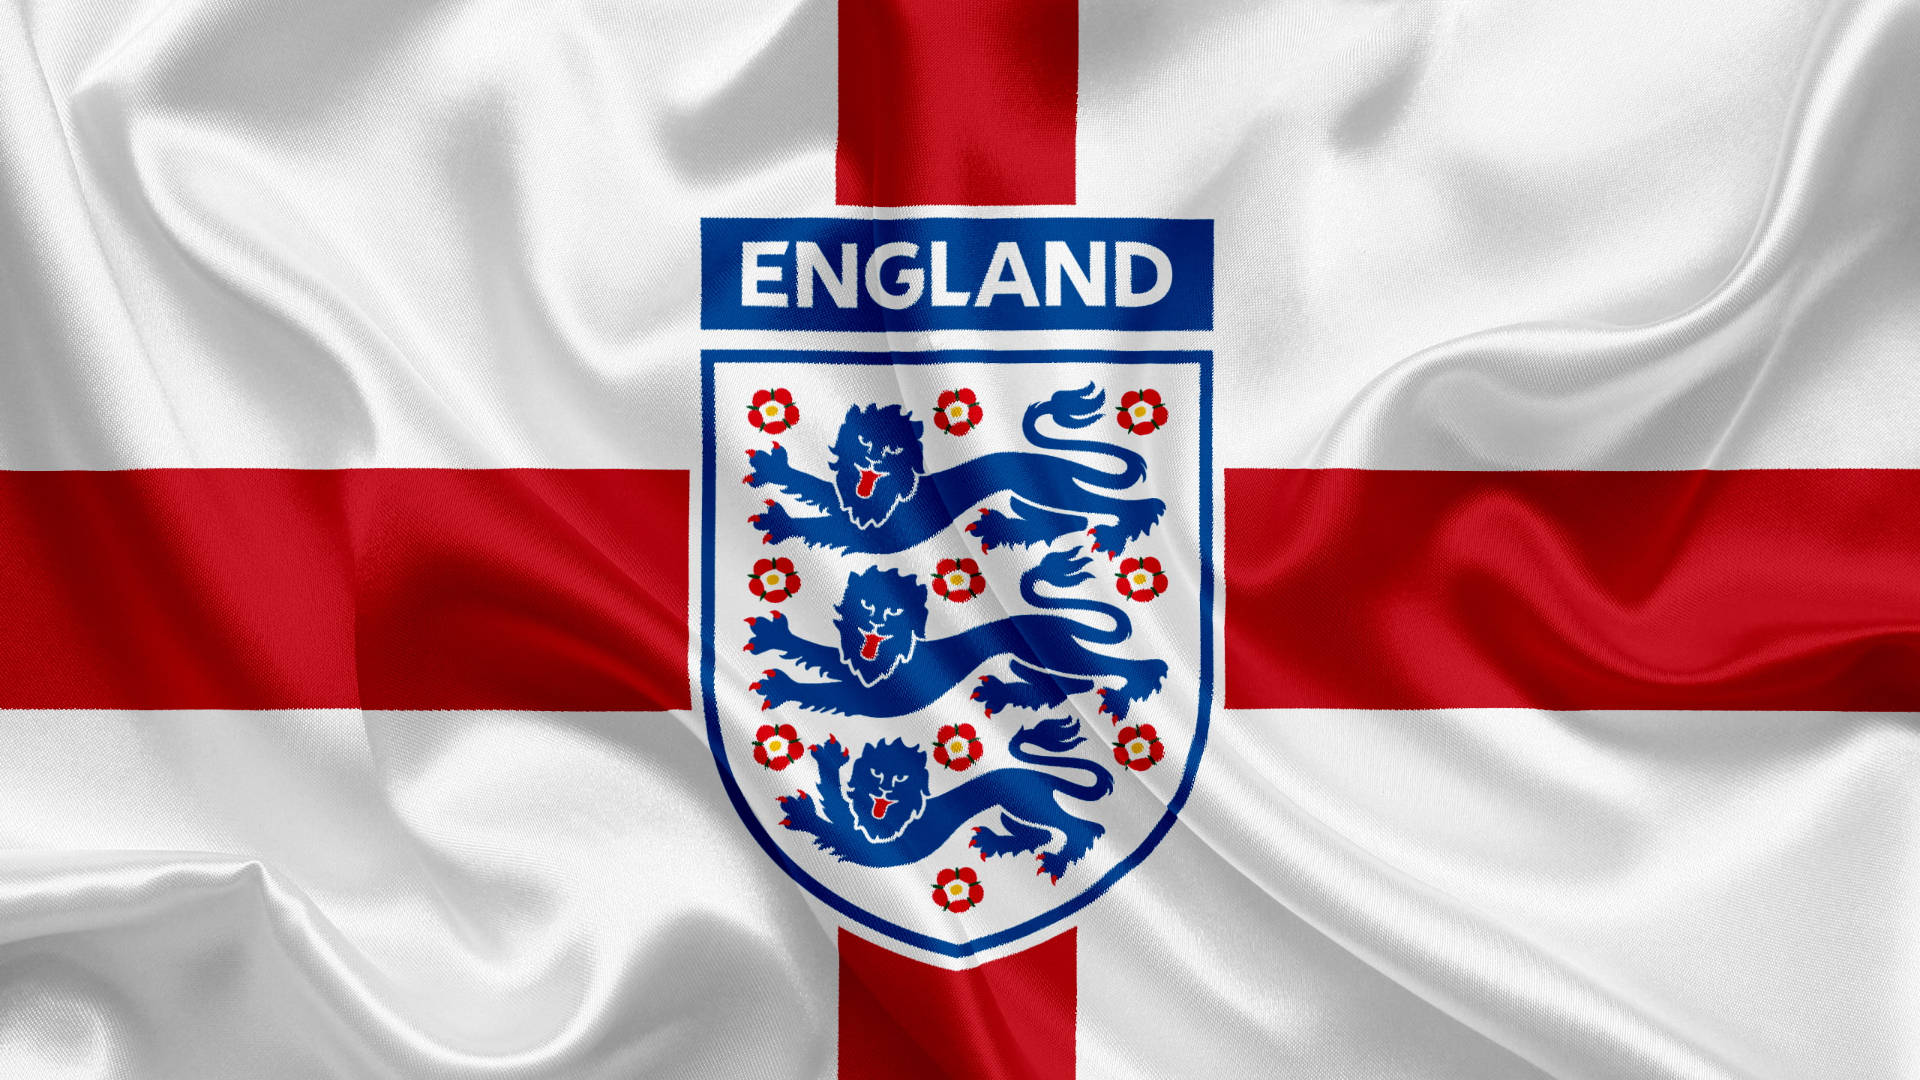 England Football Background Wallpaper